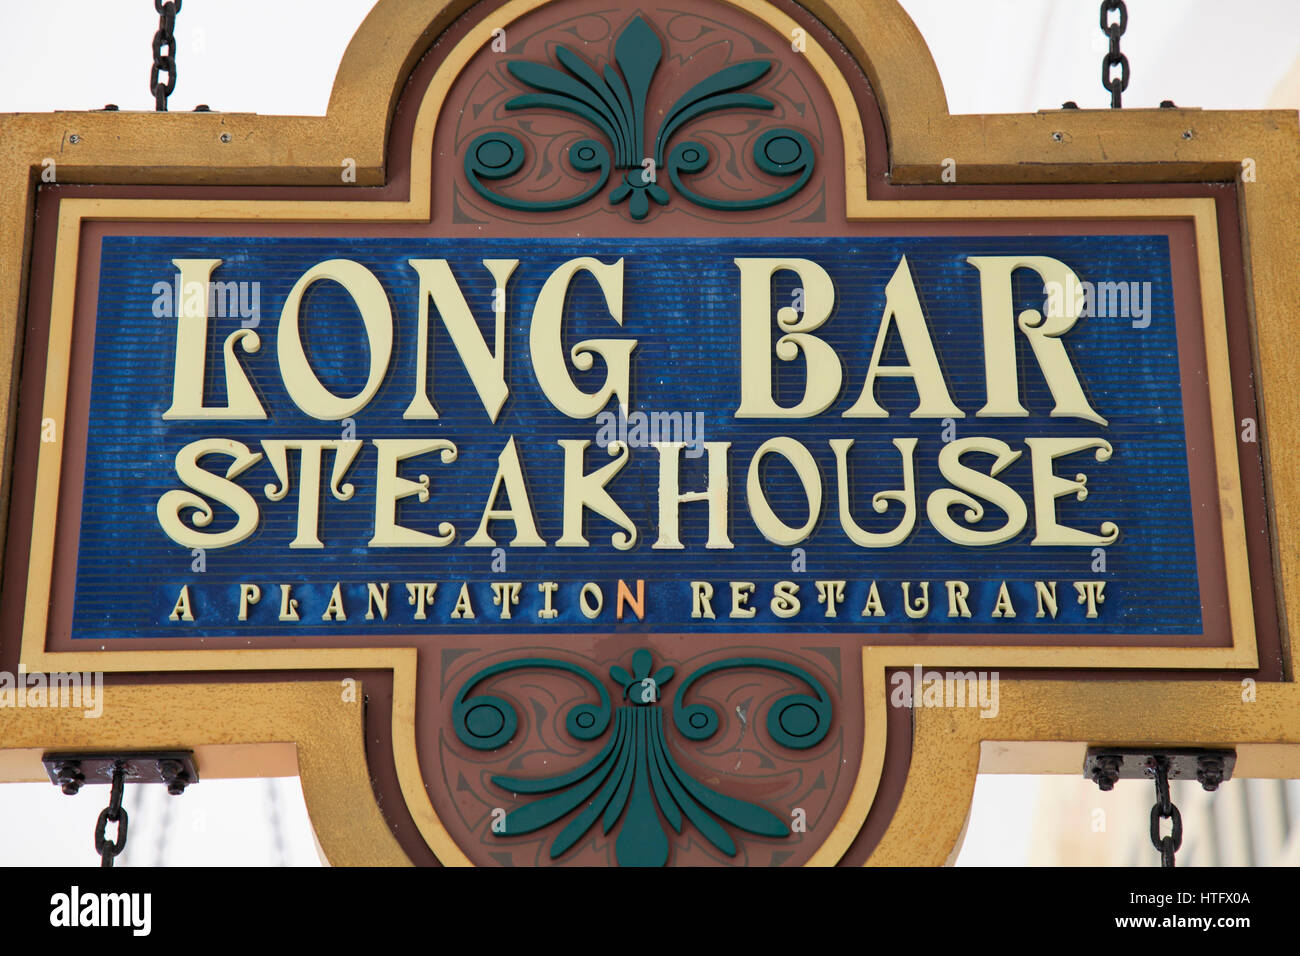 Singapore, Raffles Hotel, Long Bar Steakhouse, sign, Stock Photo